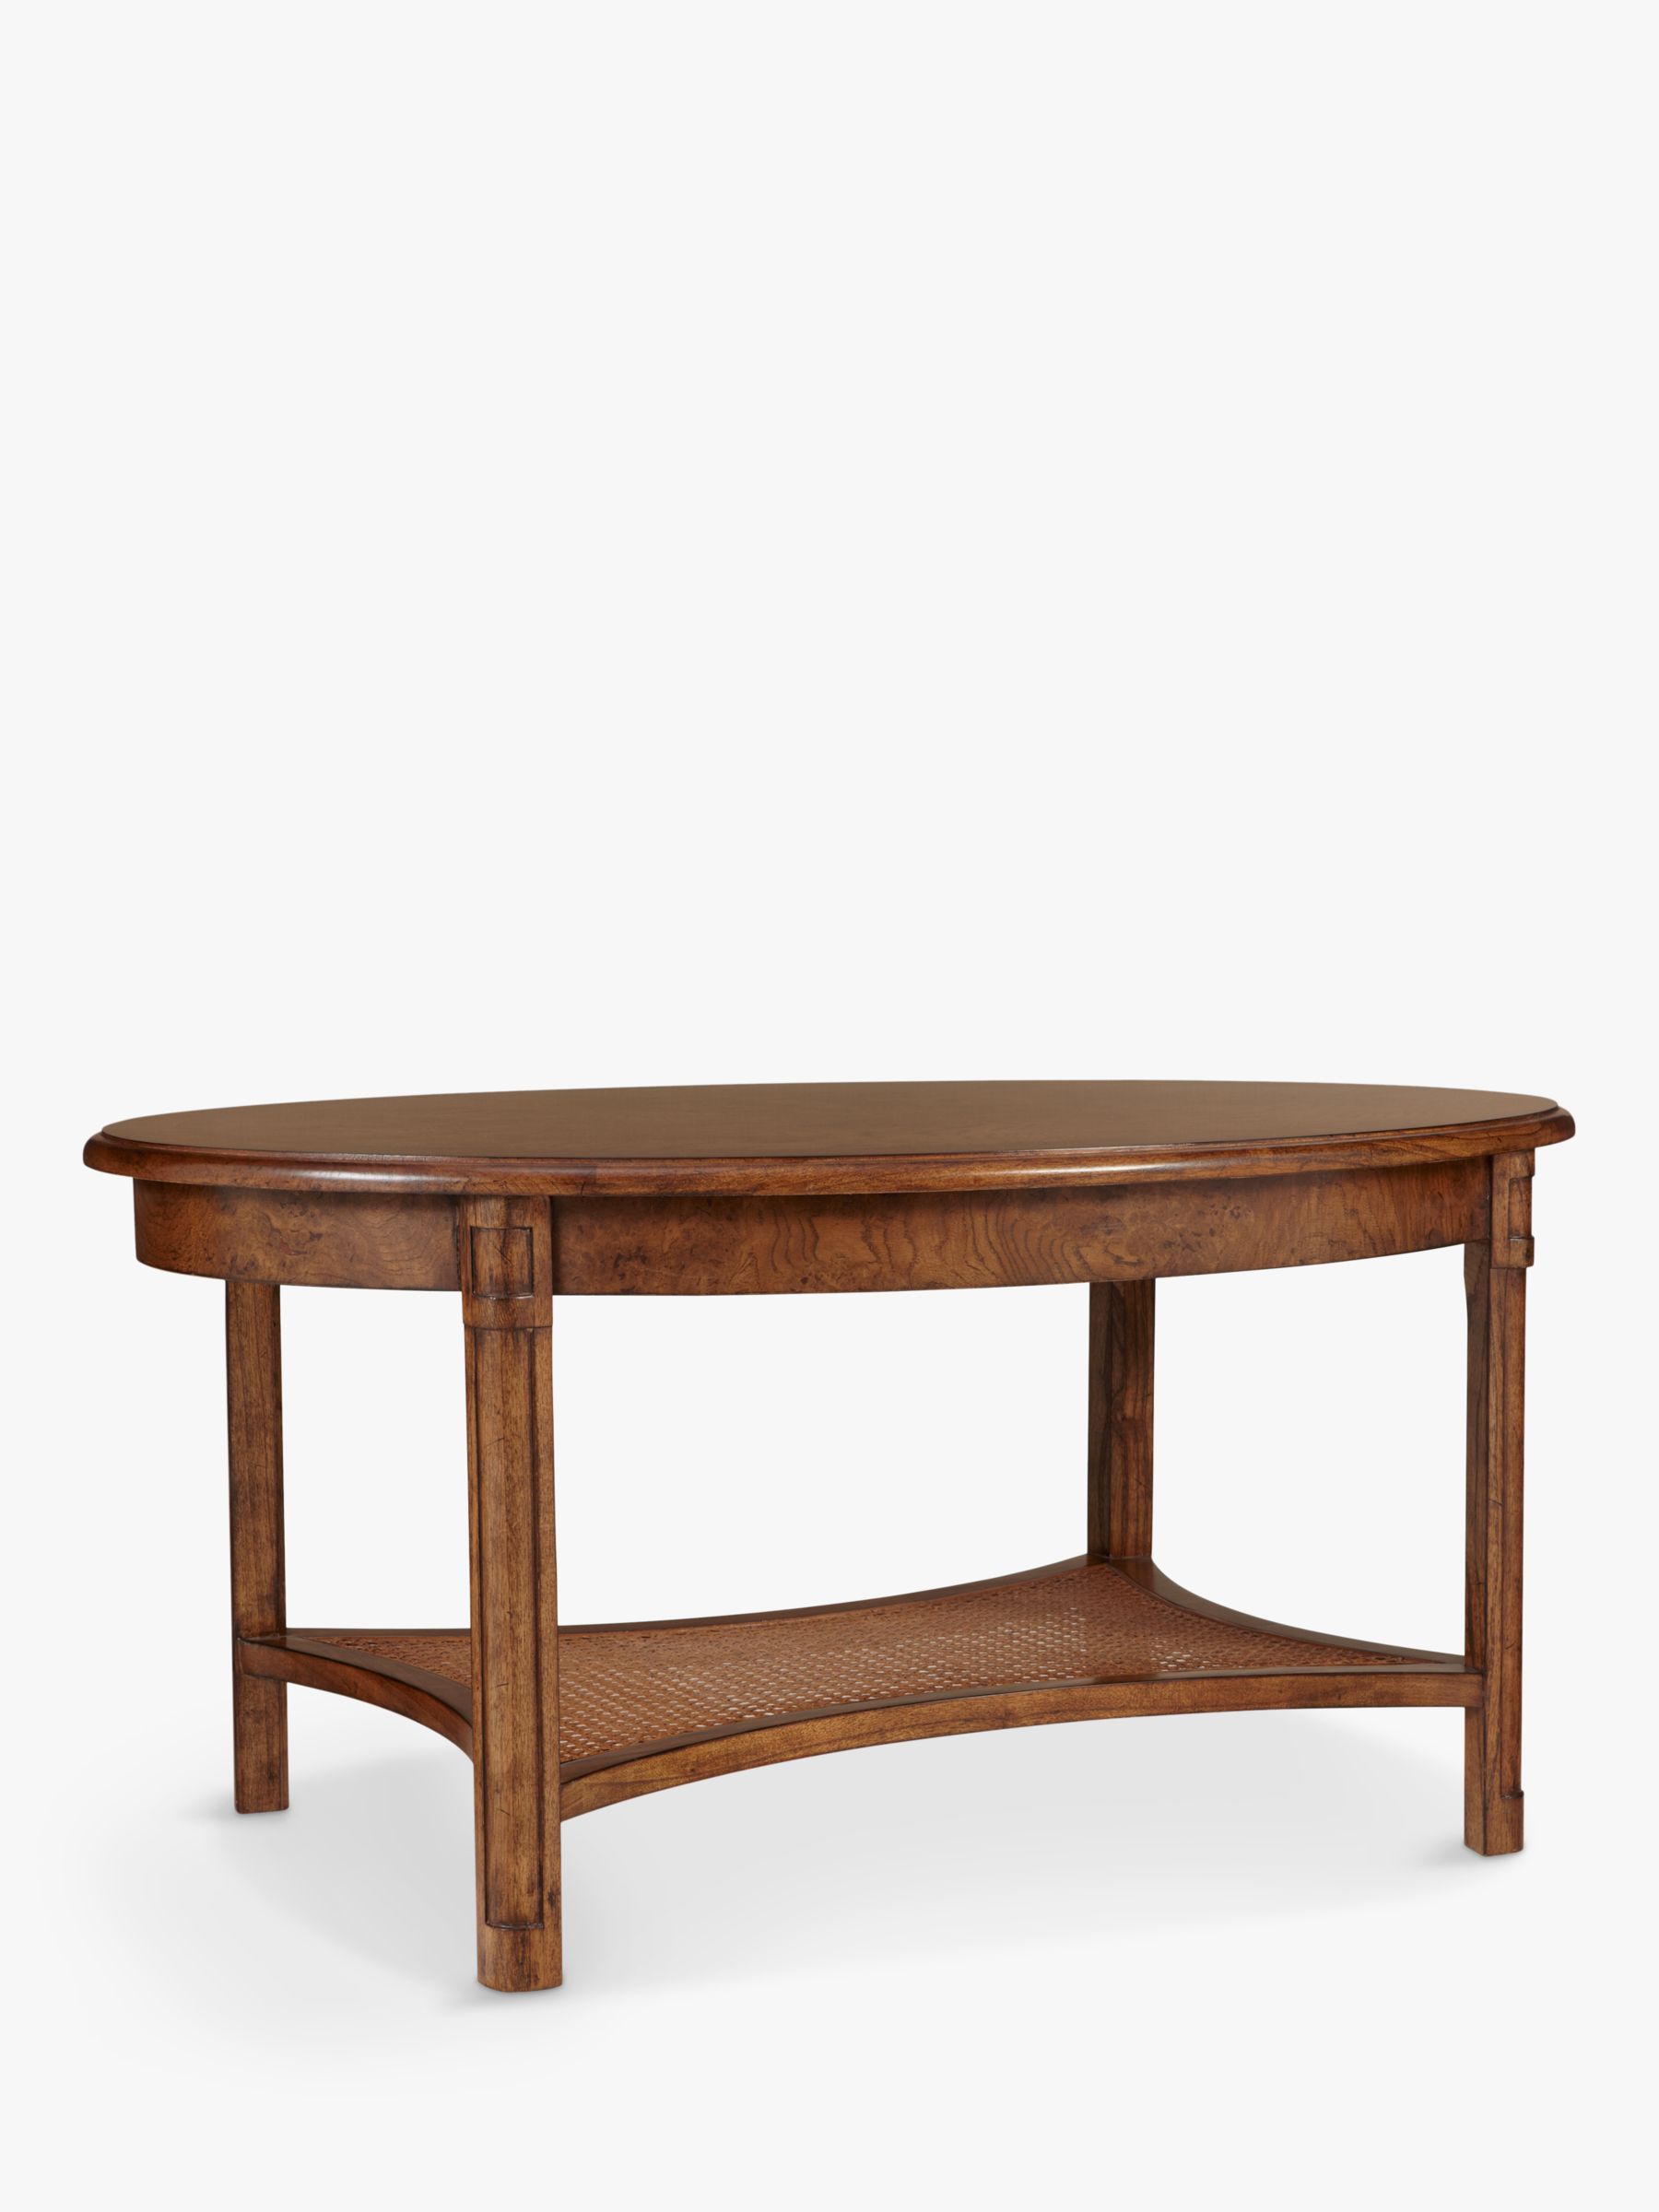 Photo of John lewis hemingway oval coffee table